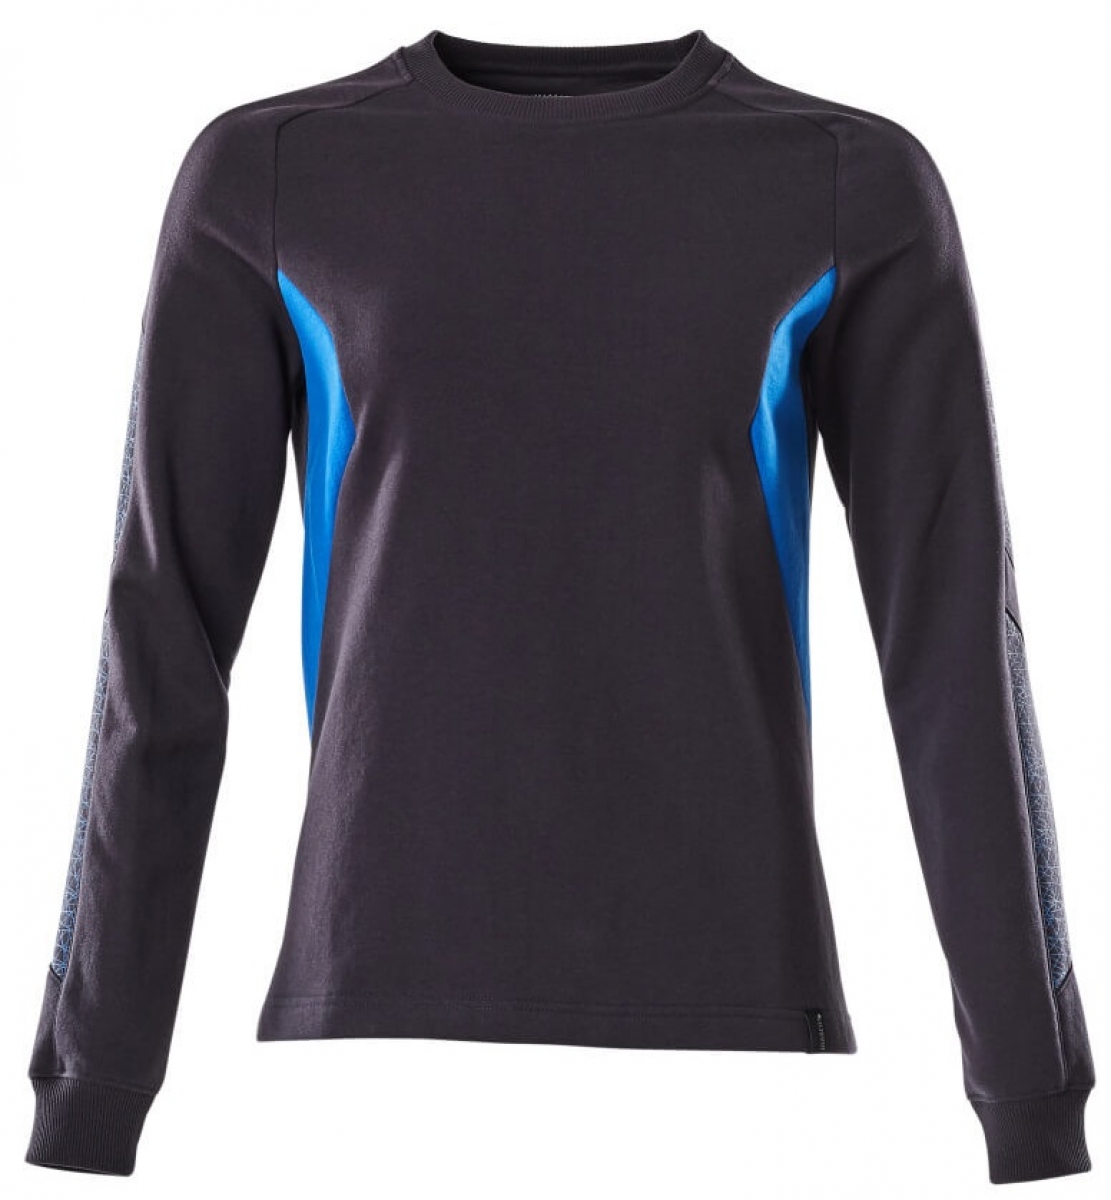 MASCOT-Worker-Shirts, Damen-Sweatshirt, 310 g/m, schwarzblau/azurblau